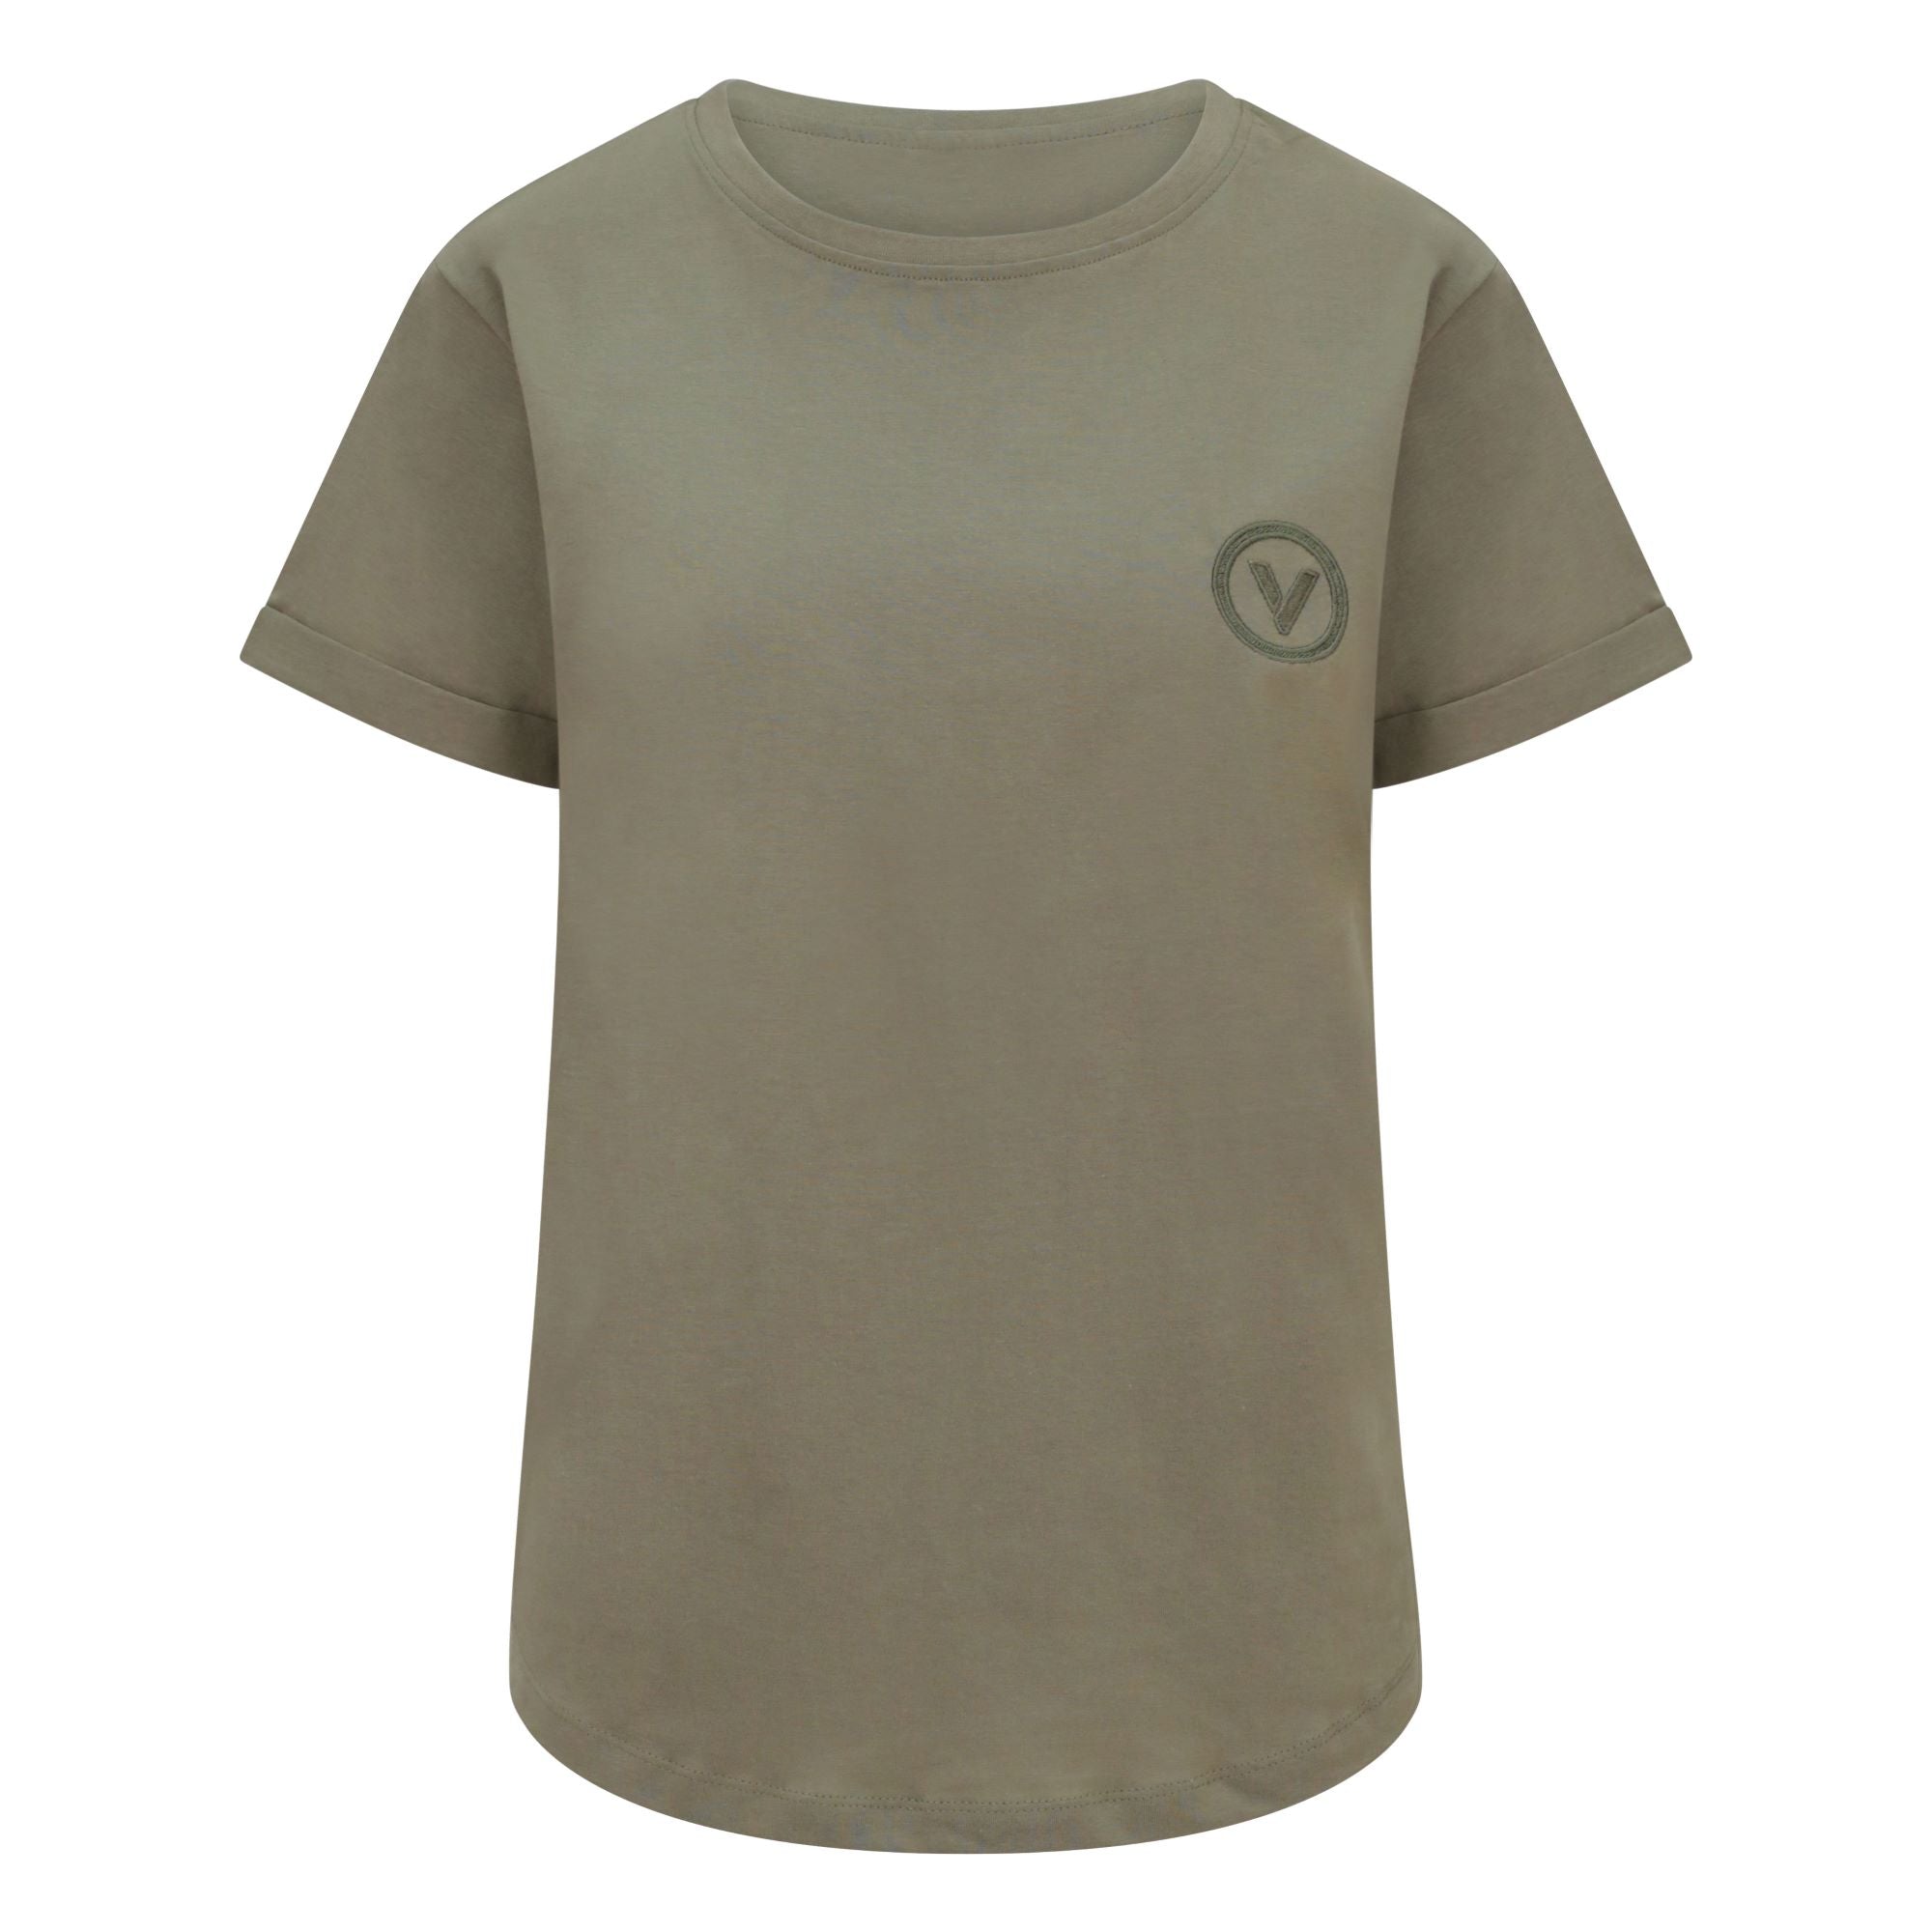 Validate Core Essentials Women's Rolled Sleeve T-Shirt Light Khaki